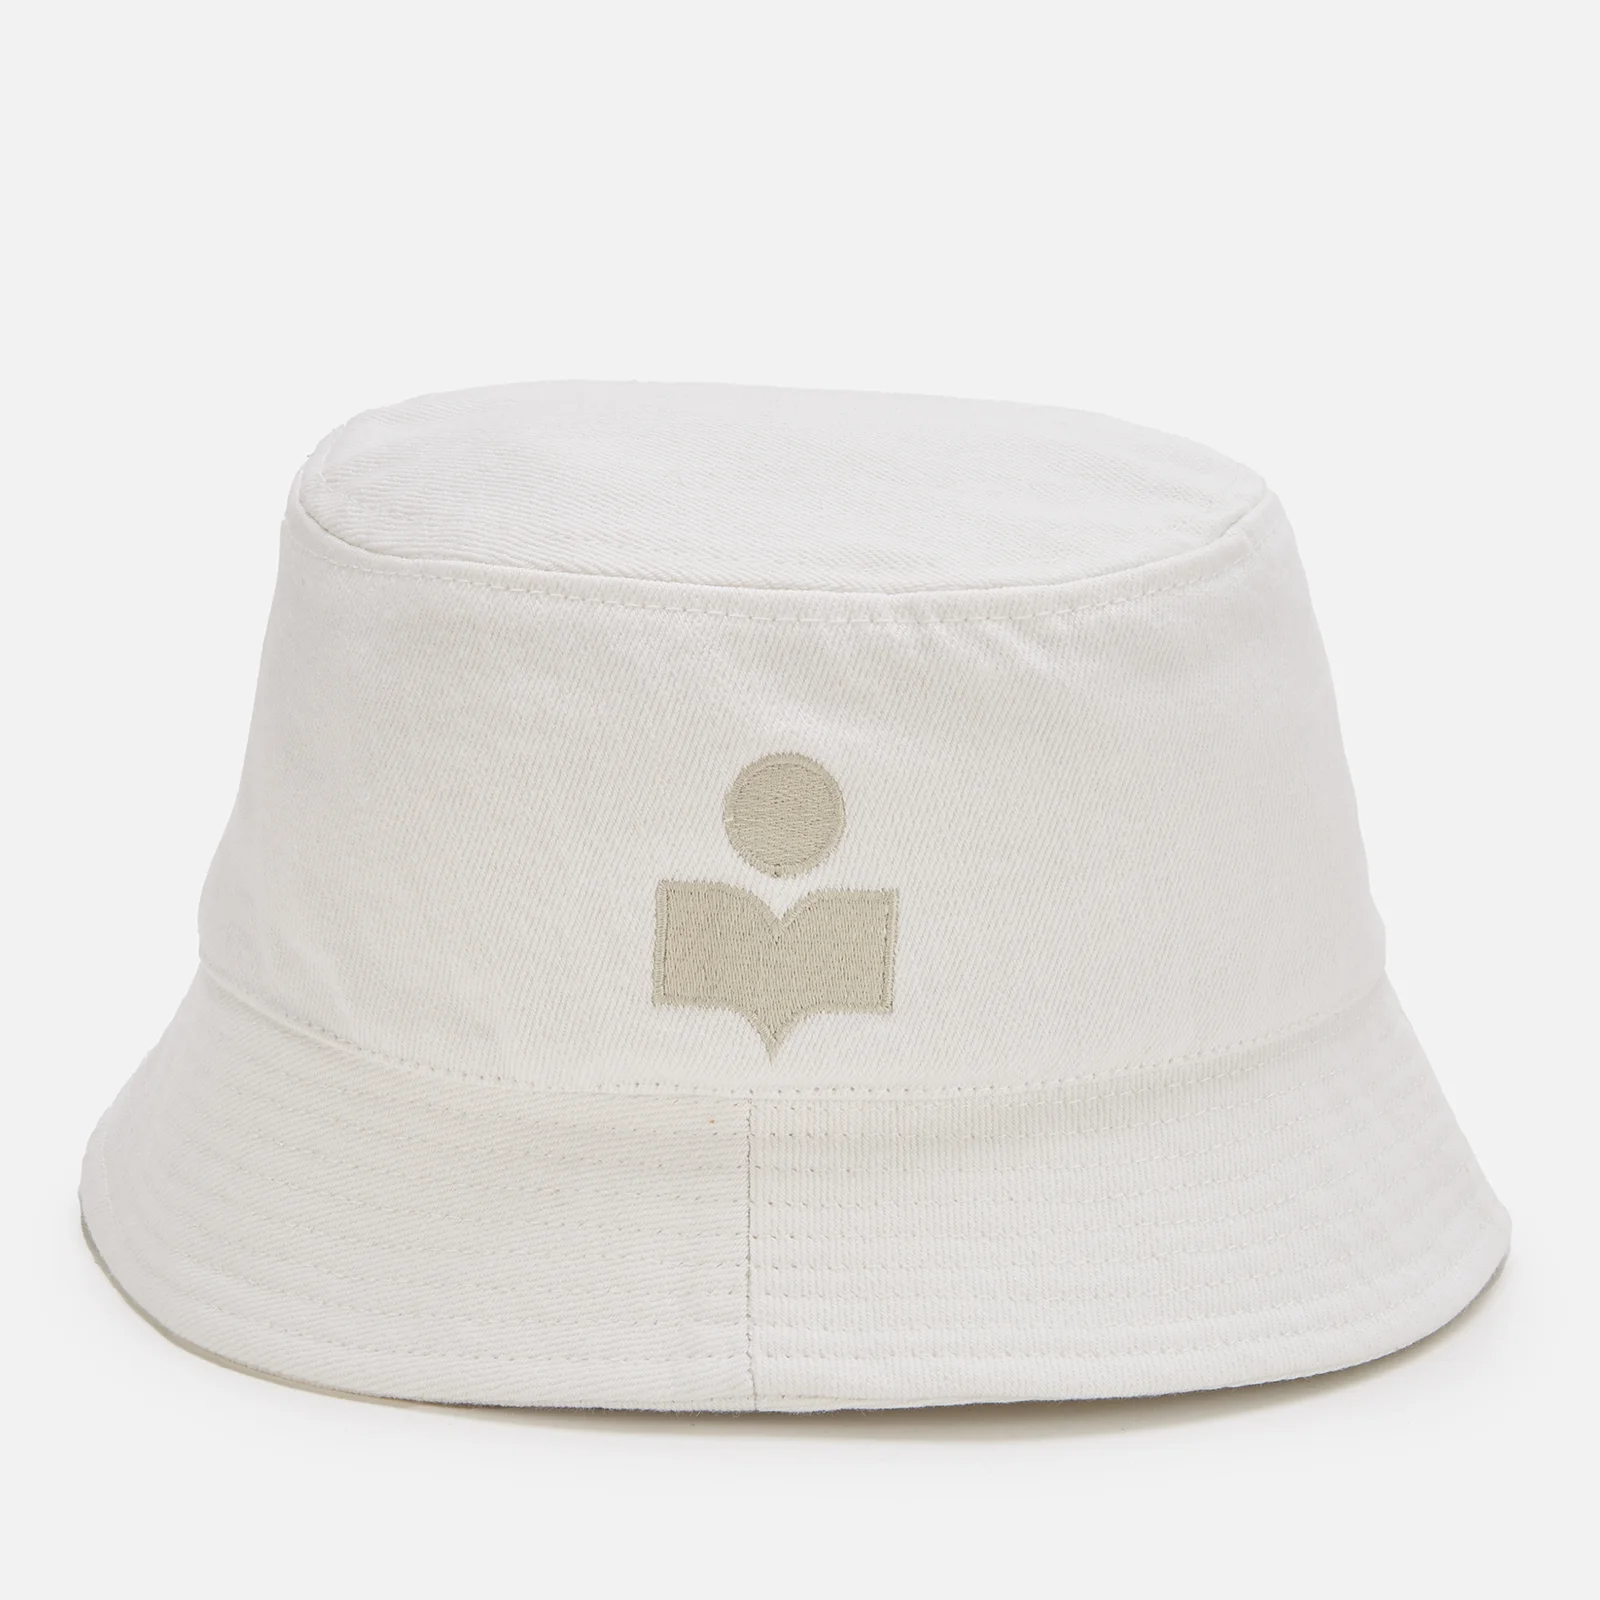 Isabel Marant Women's Haley Denim Bucket Hat - White Image 1